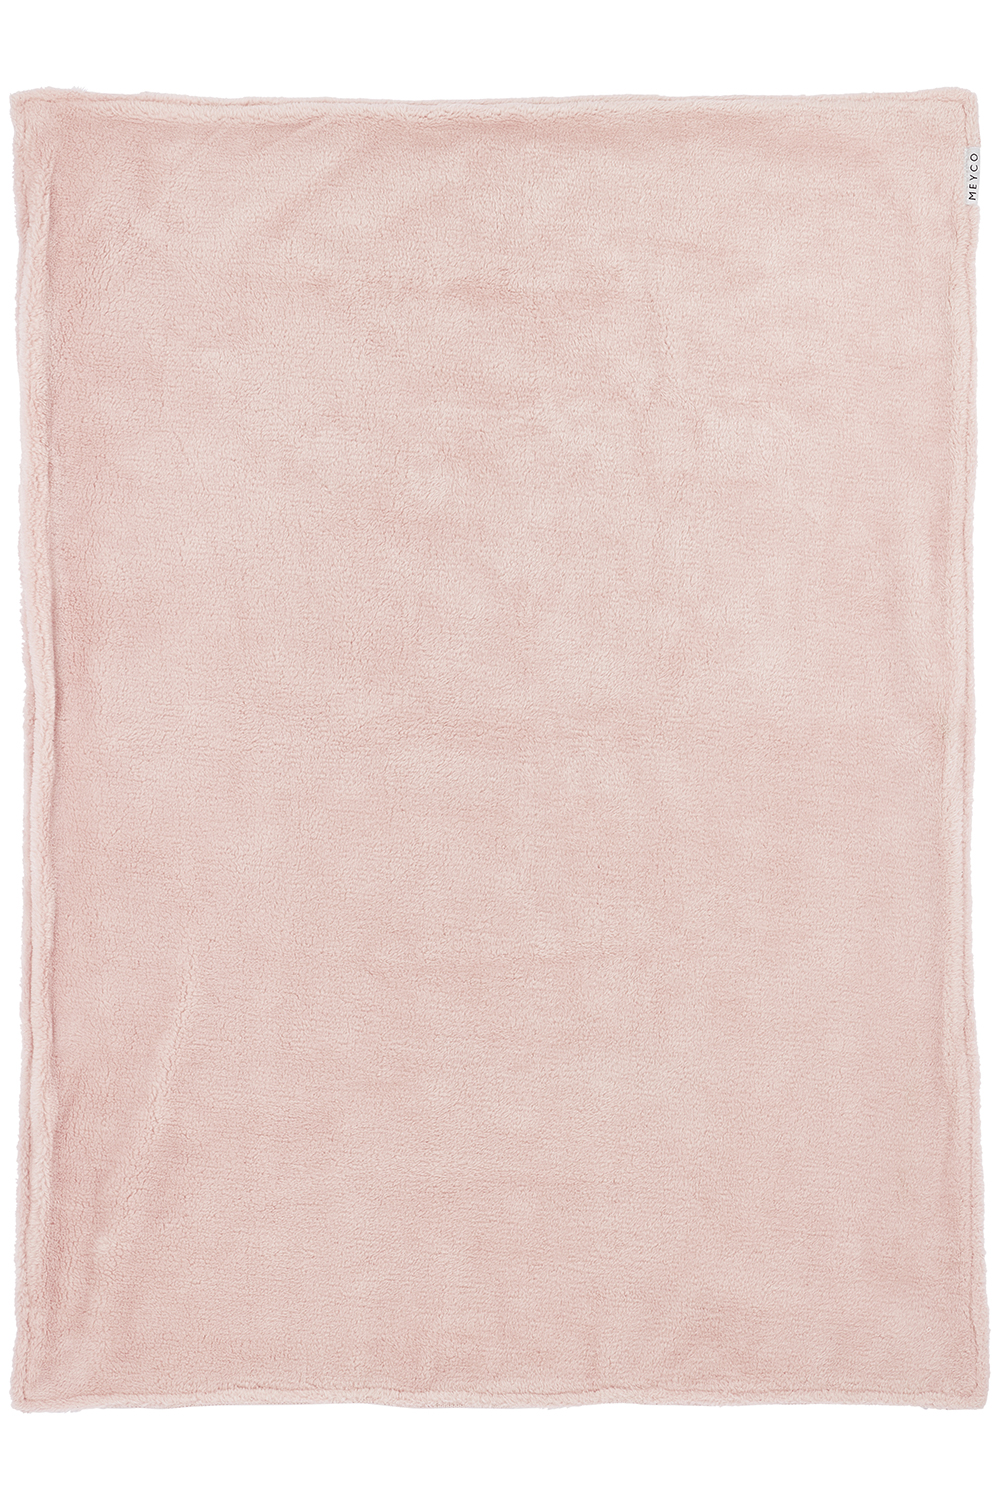 Babydecke groß Mini Knots teddy - soft pink - 100x150cm